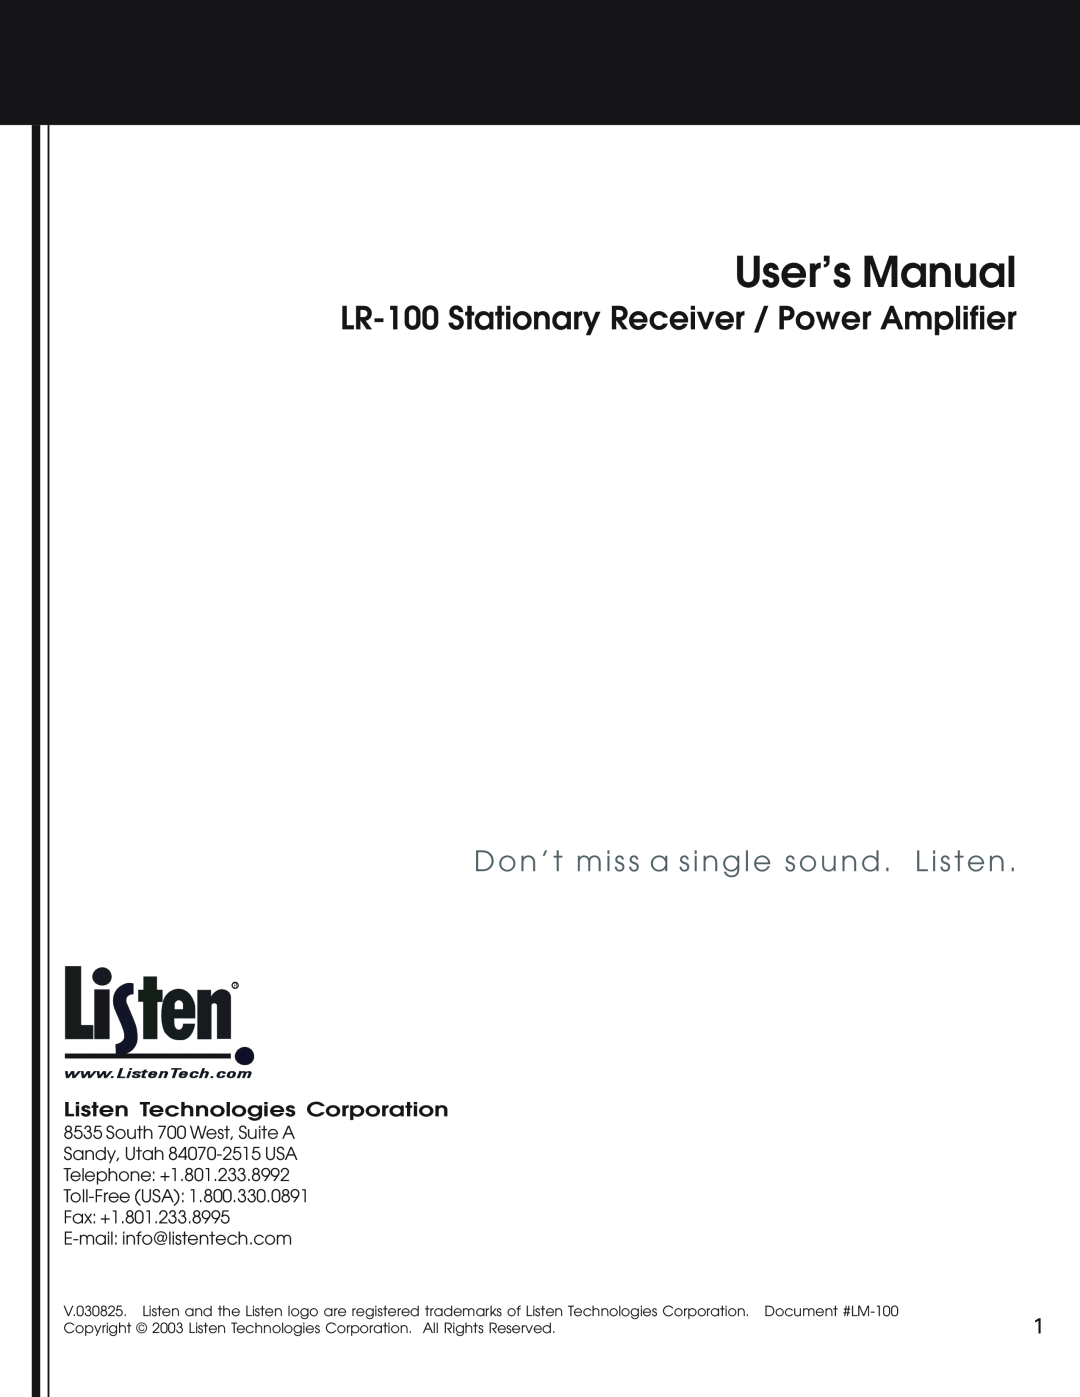 Listen Technologies user manual LR-100Stationary Receiver / Power Amplifier, Don’t miss a single sound . Listen 